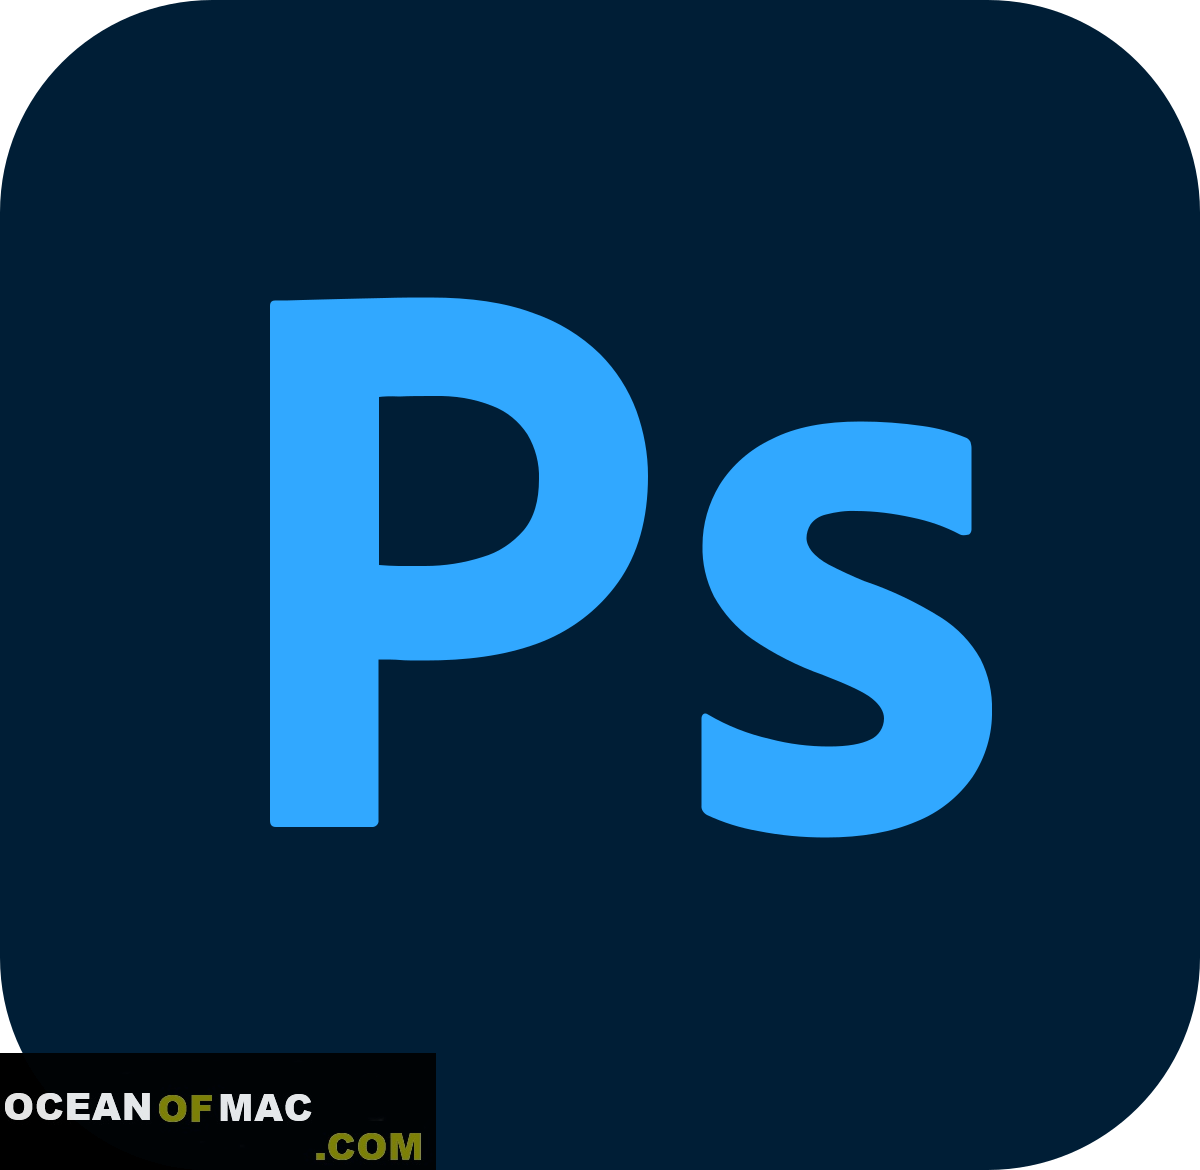 adobe photoshop 2022 mac free download